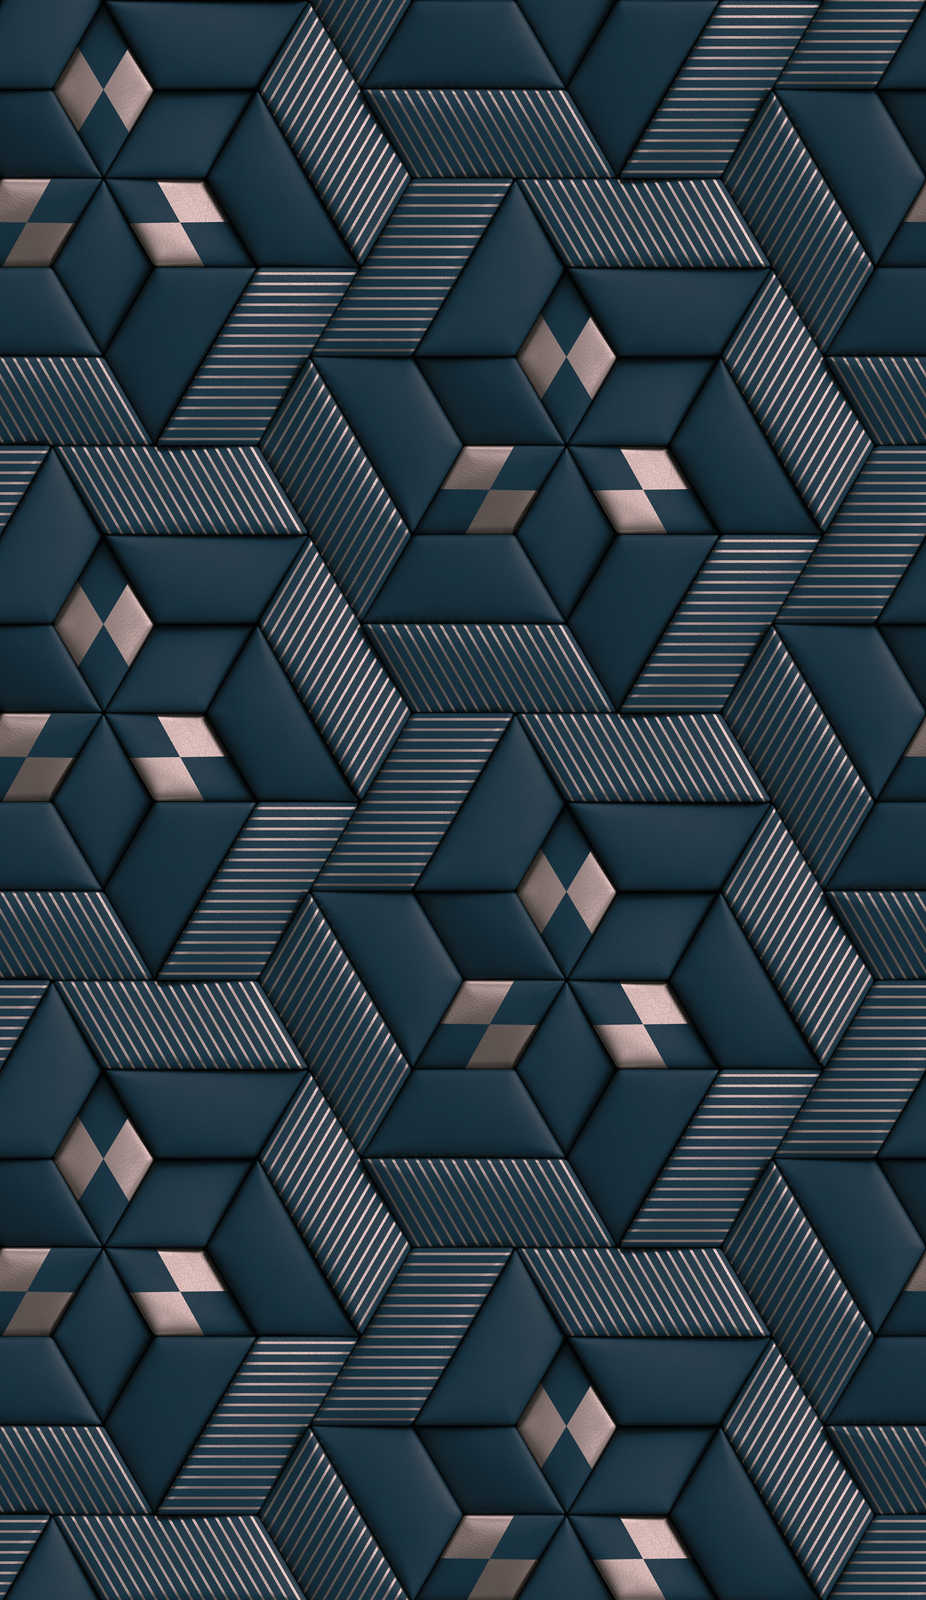             Vliestapete mit abstraktem 3D-Muster – Blau, Silber
        